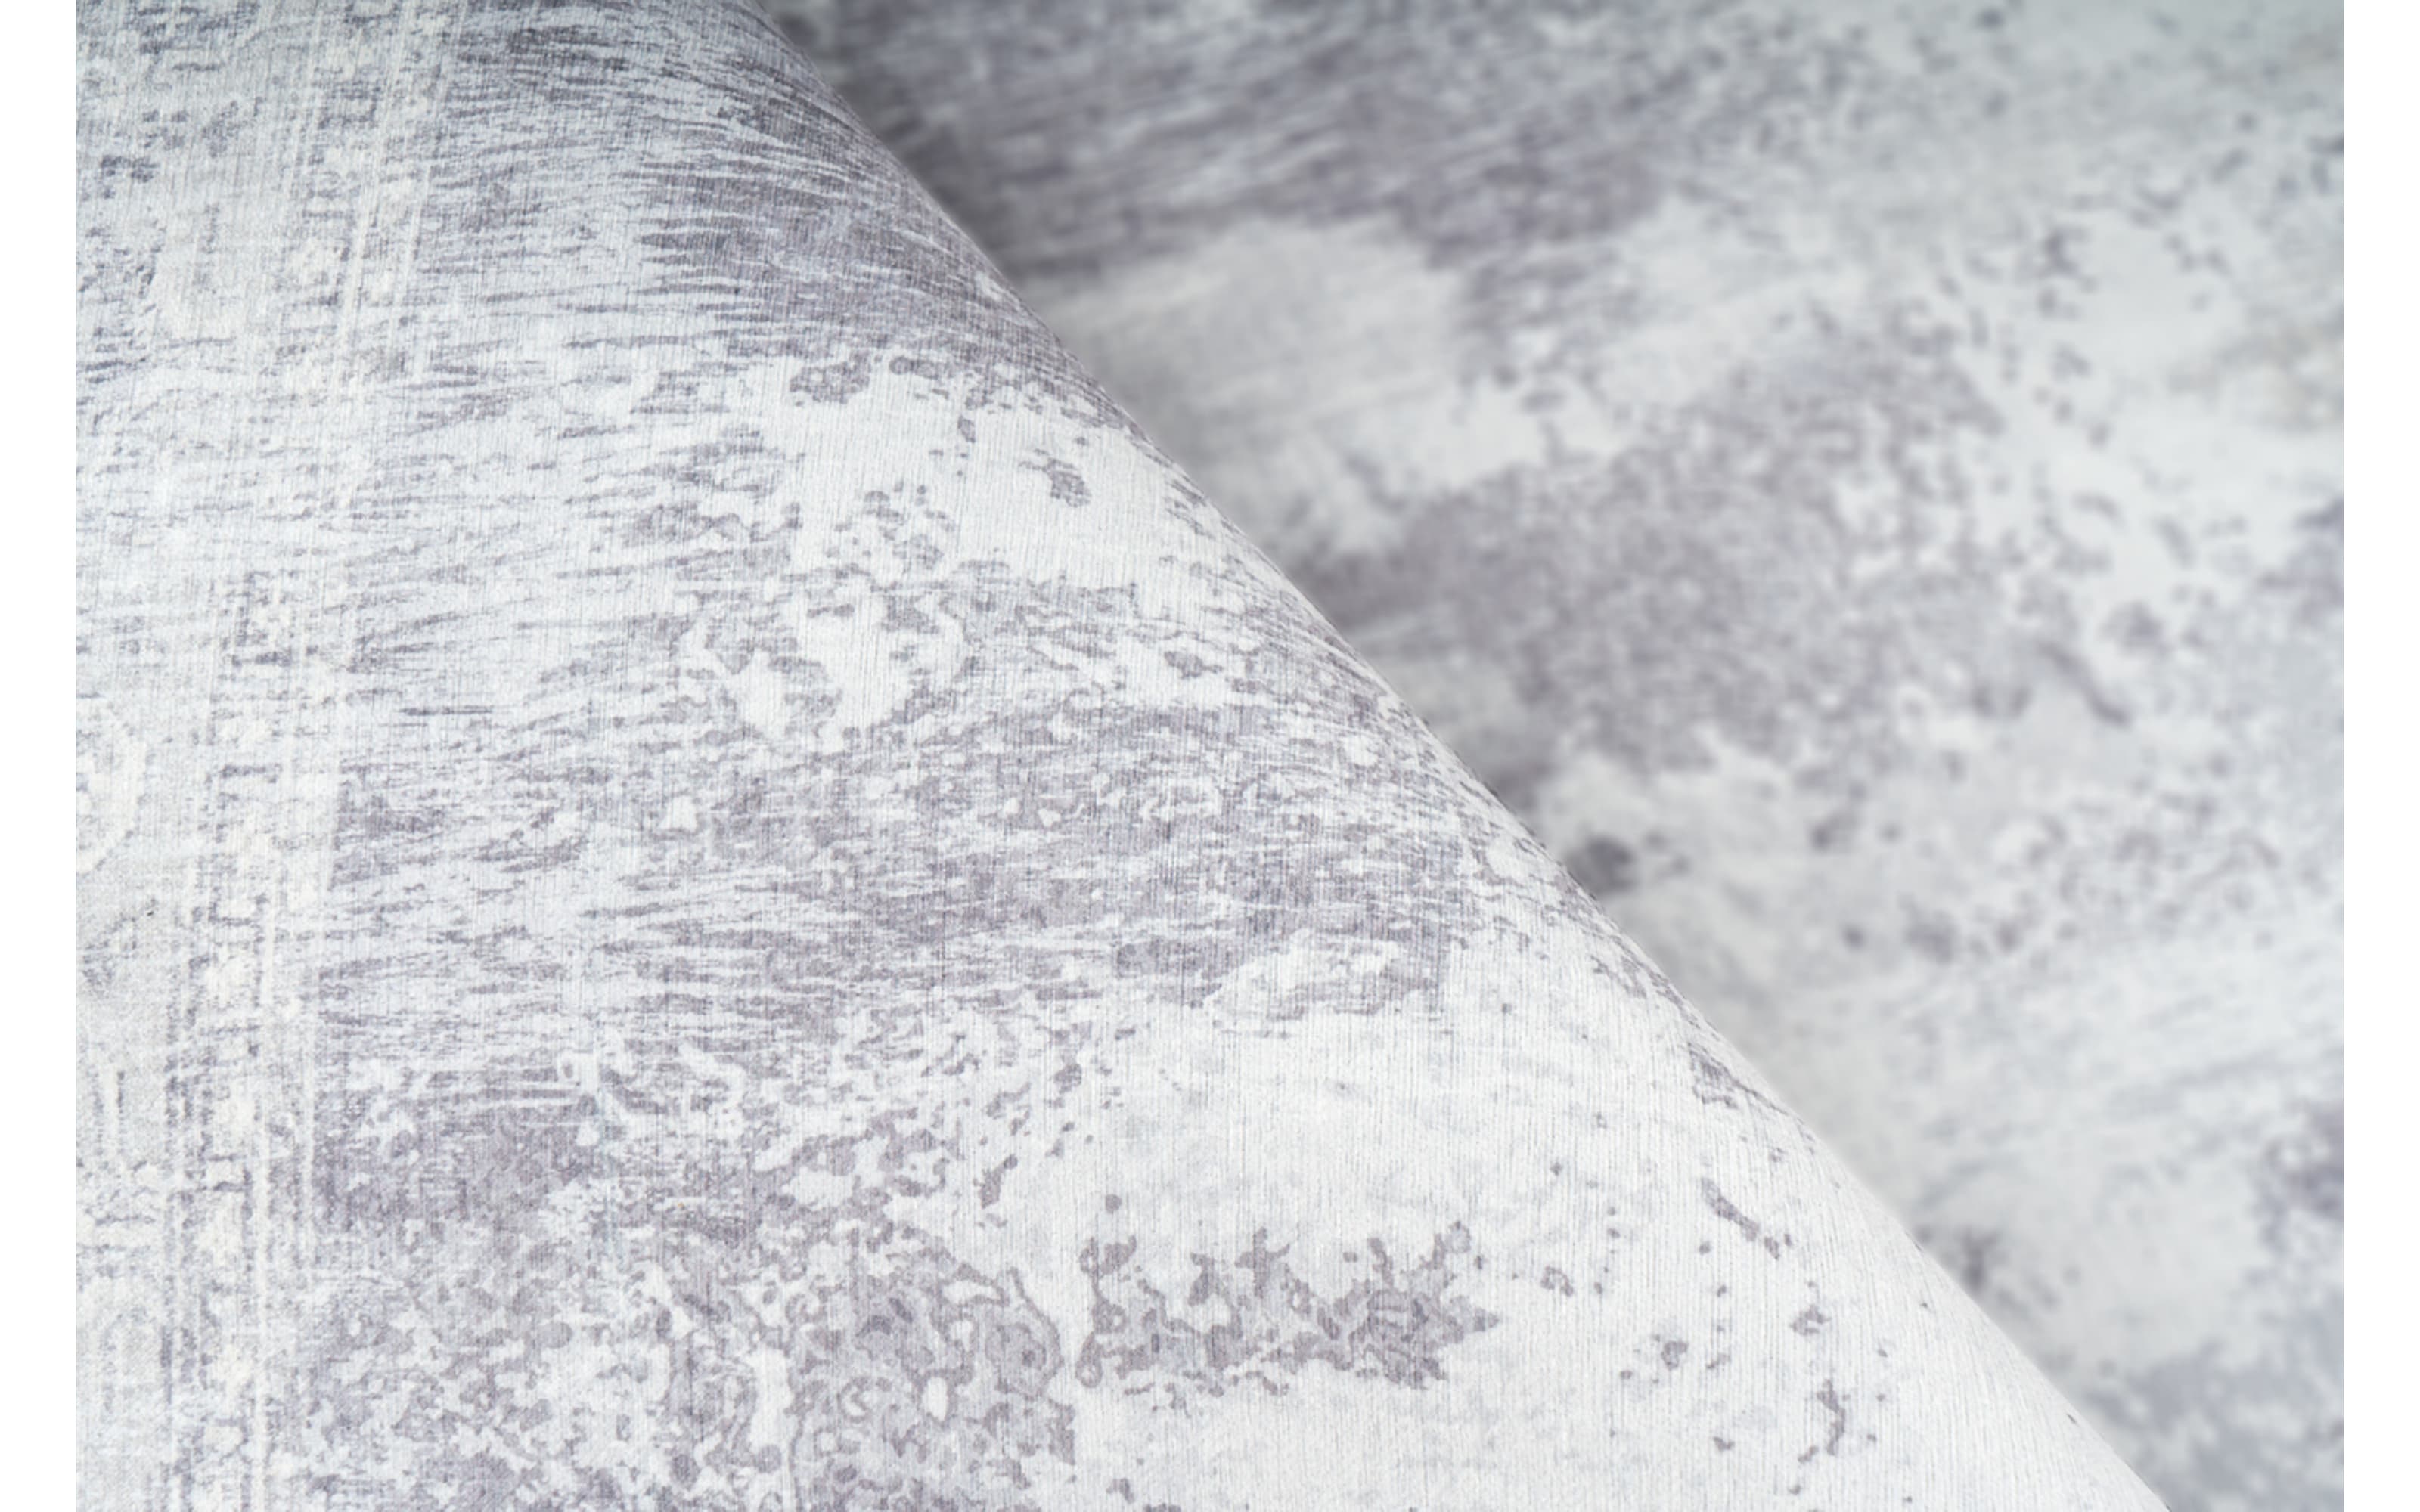 Teppich Galaxy 1000 in beige/grau, 200 x 290 cm